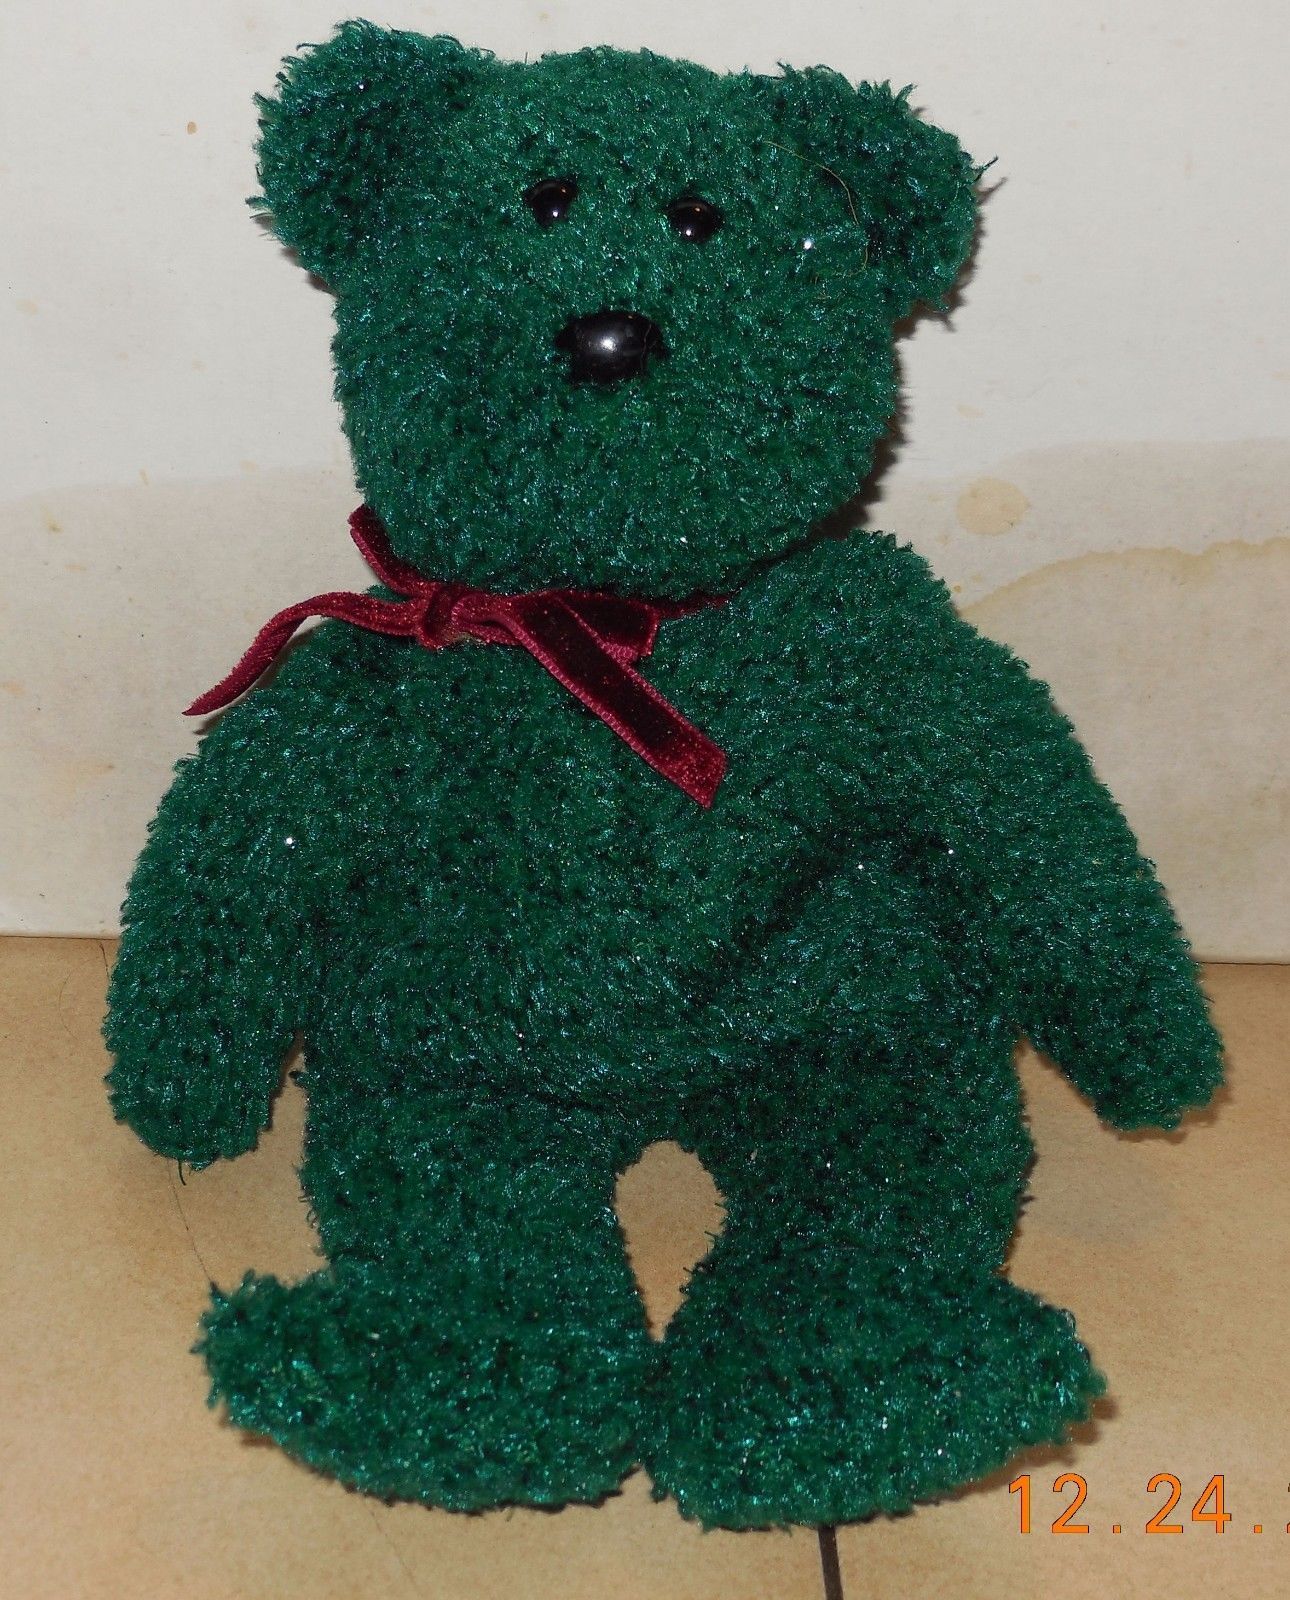 2002 holiday teddy beanie baby value